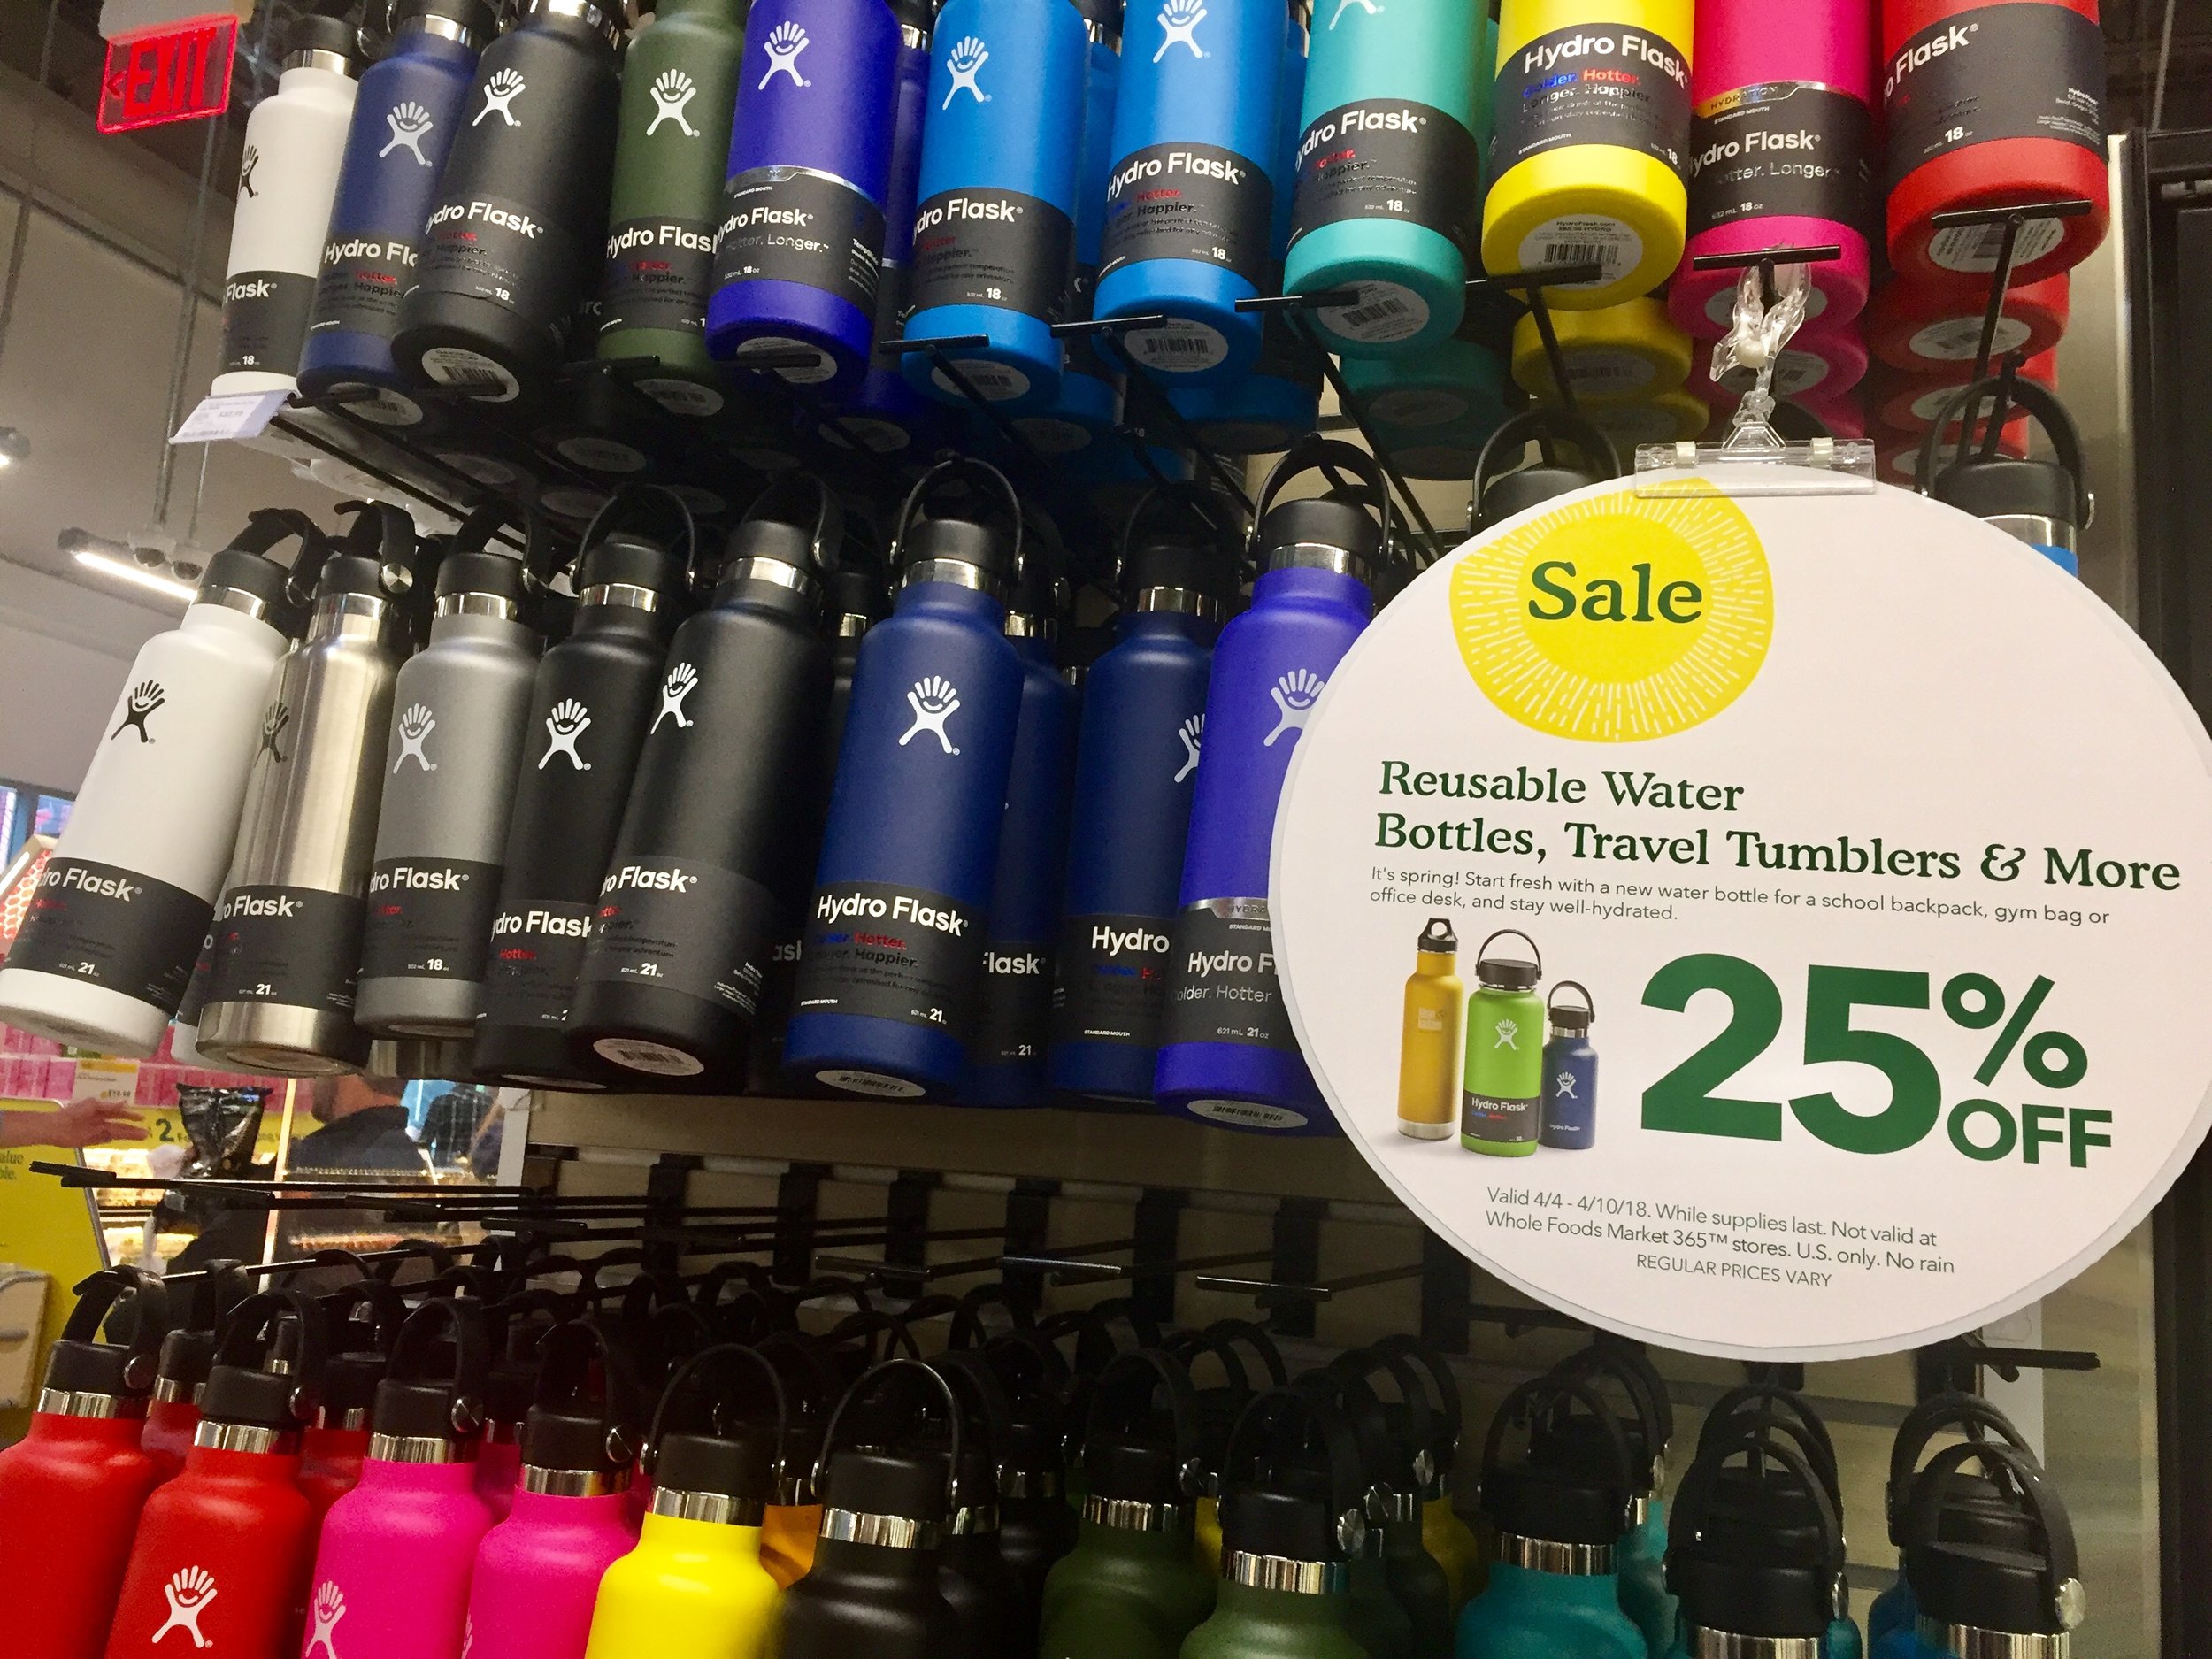 Devi Ohira April 2018 Whole Foods sale 25% off Hydroflask discount water bottle reusable eco friendly.jpg